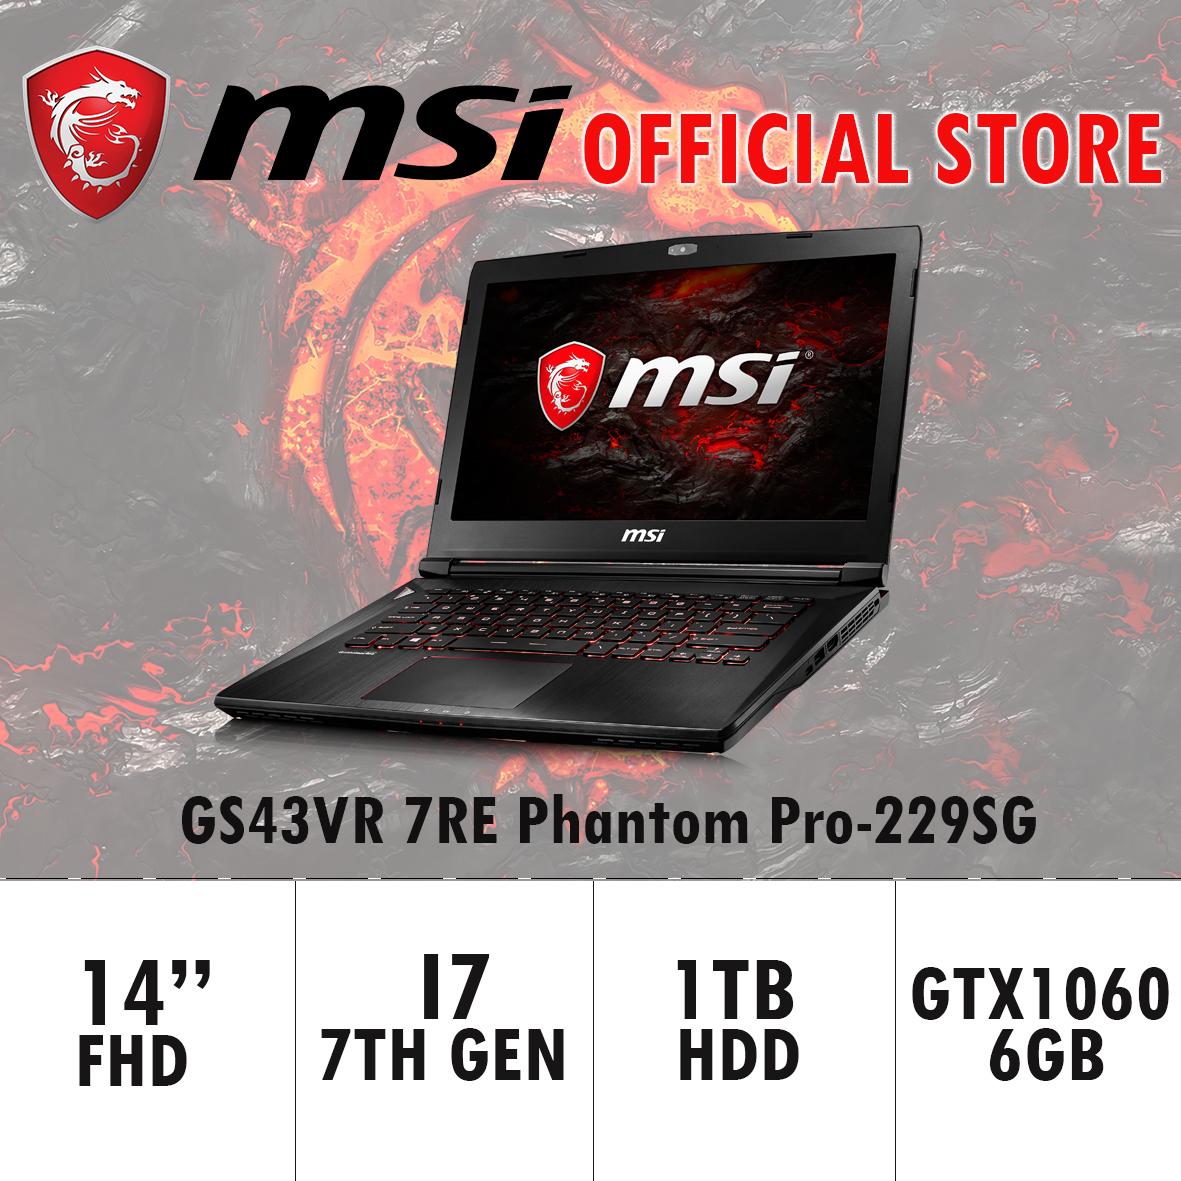 MSI GS43VR 7RE Phantom Pro-229SG (I7-7700HQ/16GB DDR4/128GB SSD +1TB HDD/6GB NVIDIA GTX1060) GAMING LAPTOP